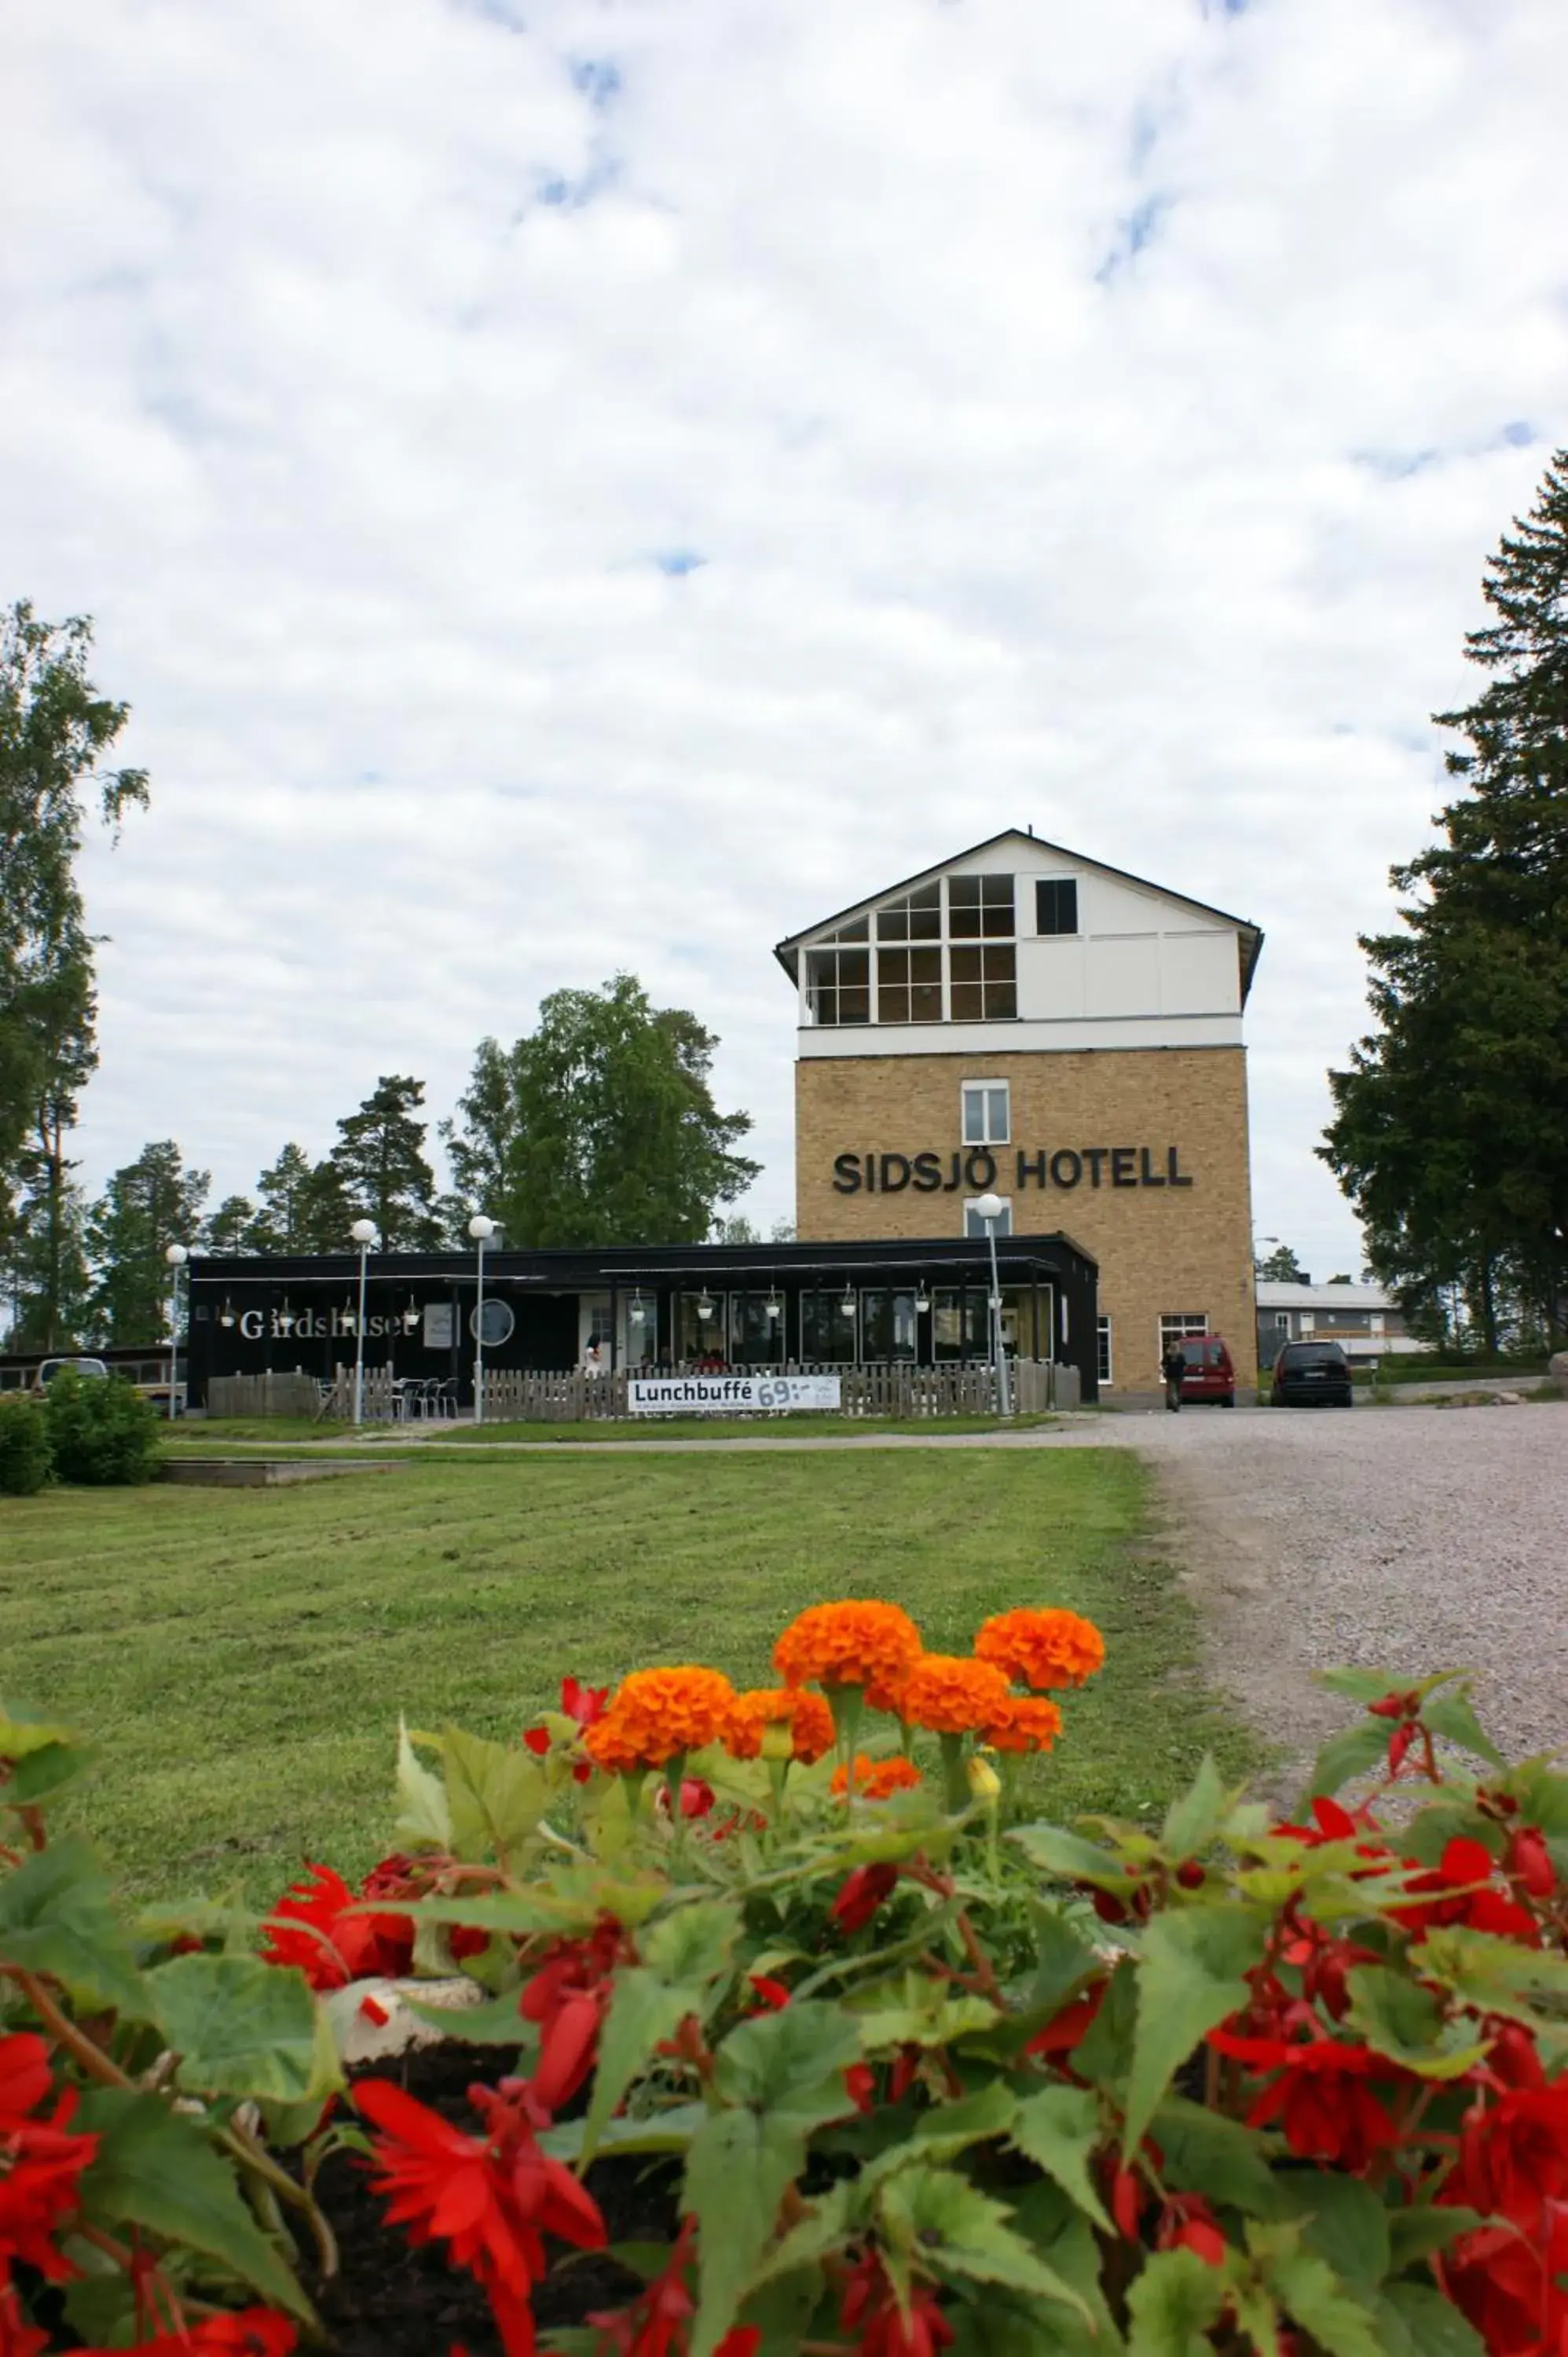 Property building in Sidsjö Hotell & Konferens